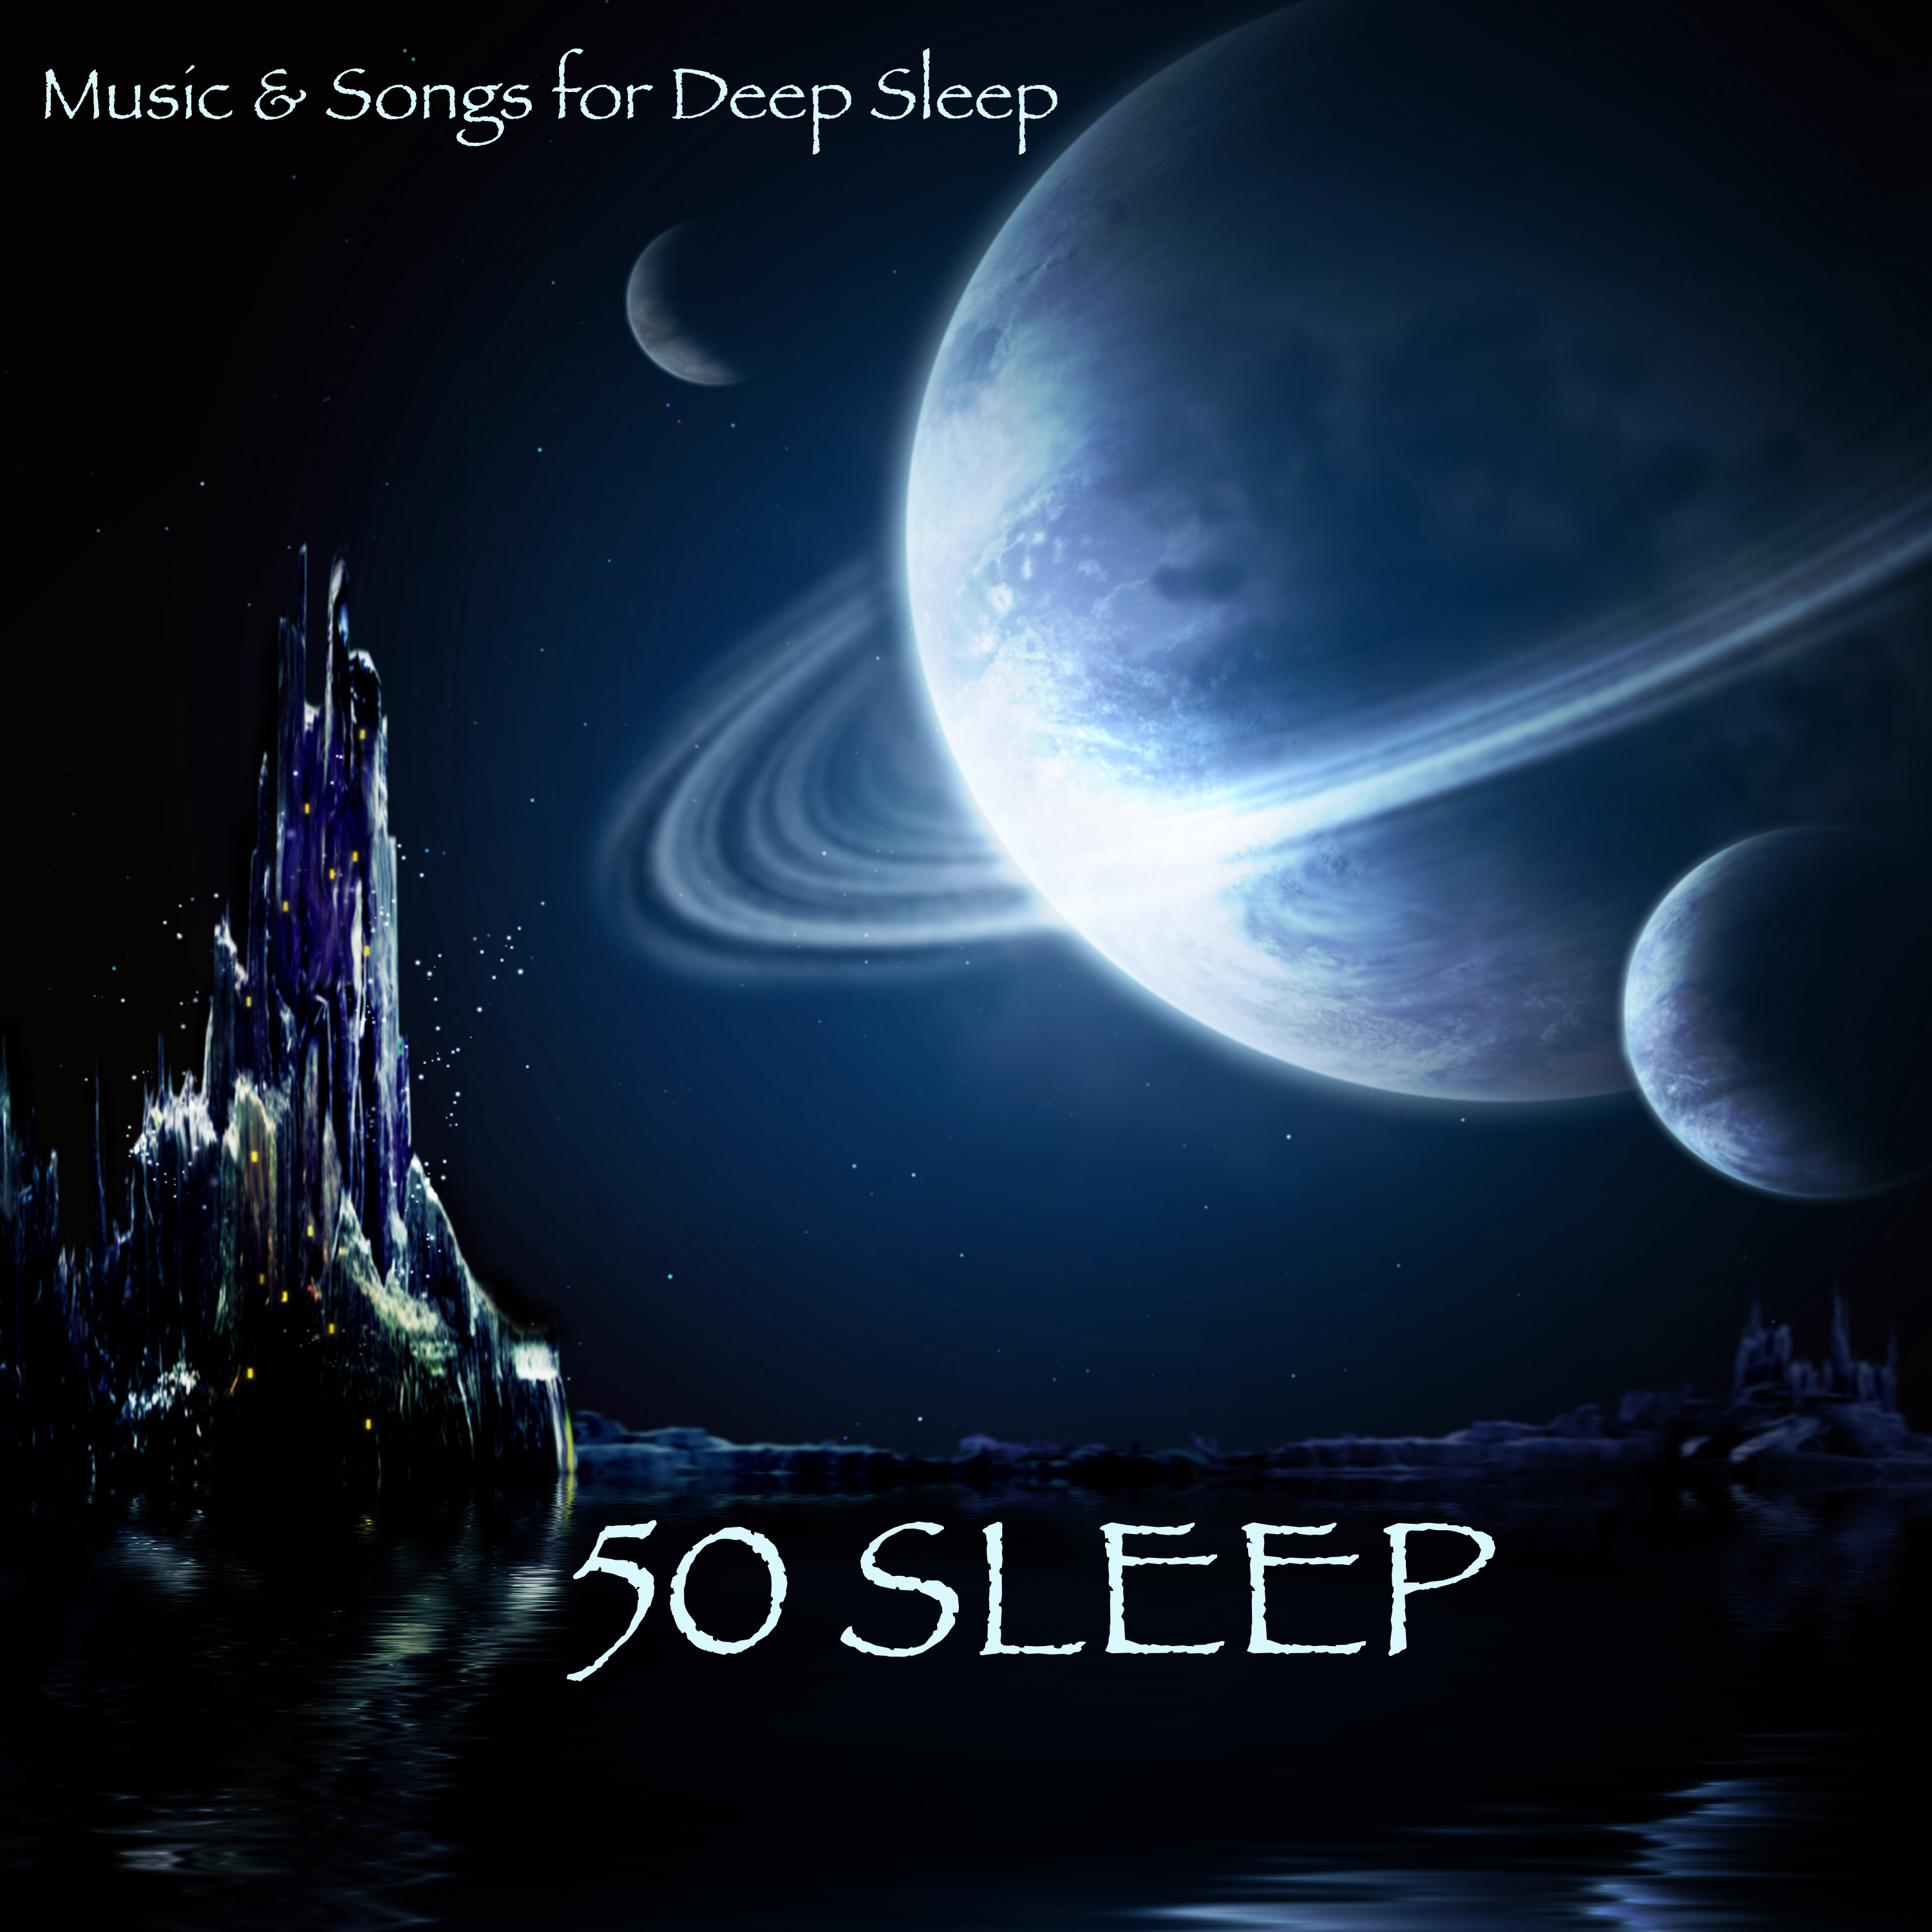 Sleep Music Lullaby